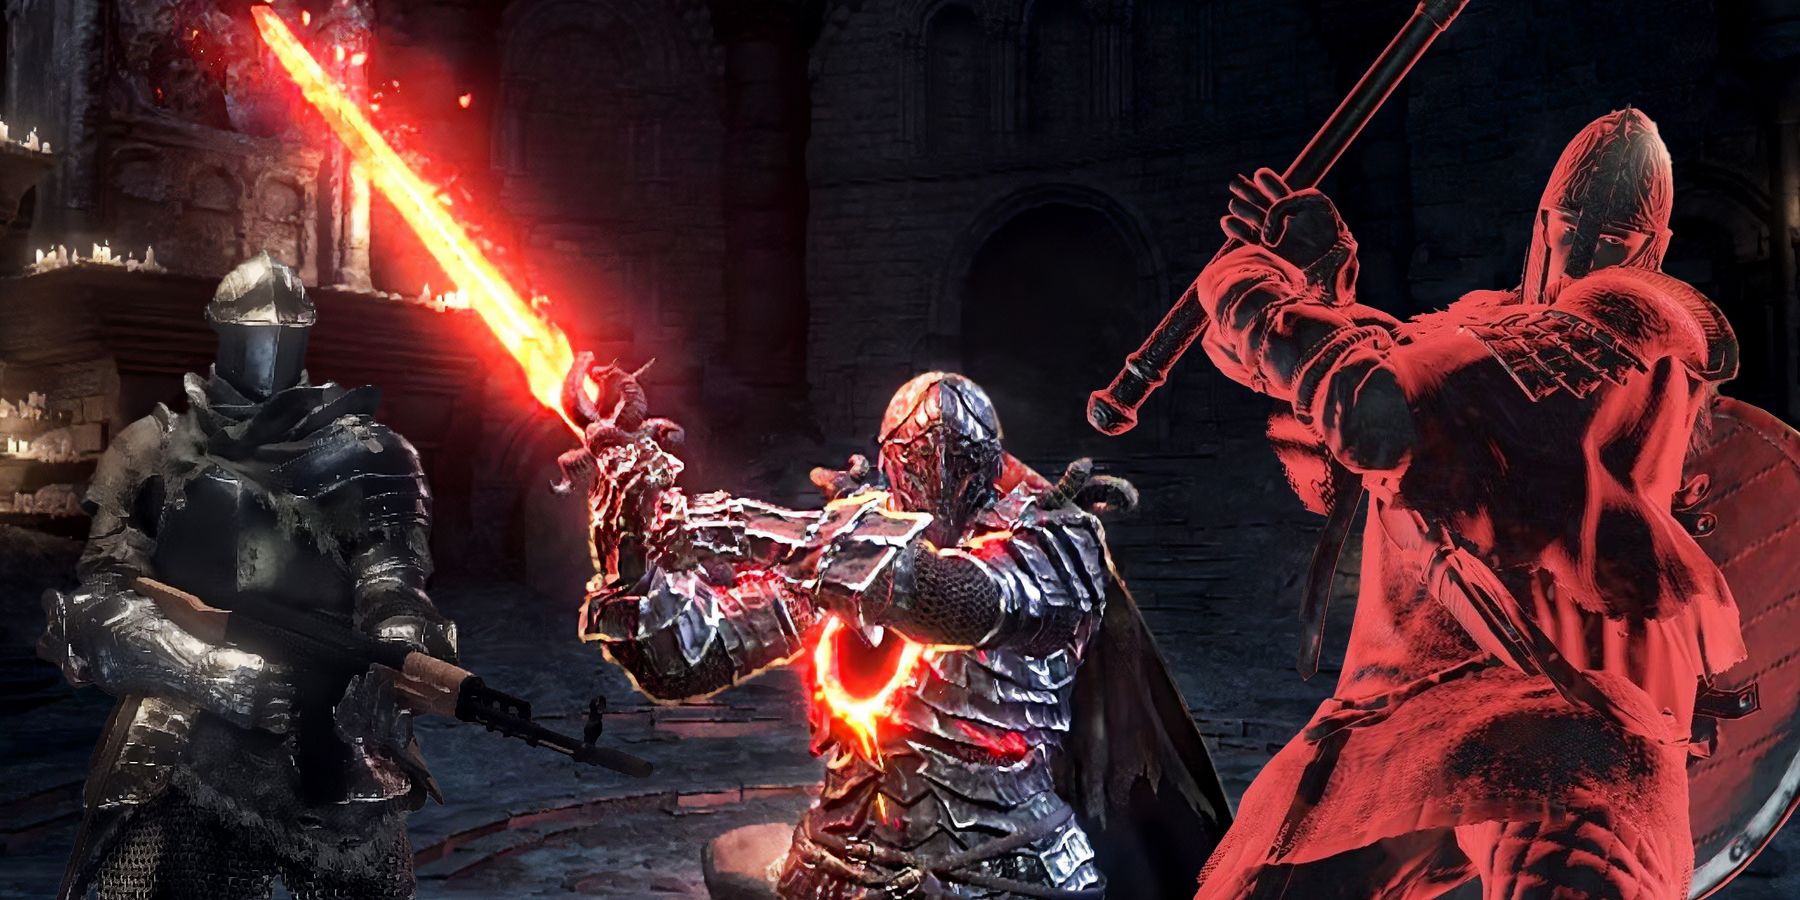 Dark Souls 2 Enemy Randomizer mod is a game changer